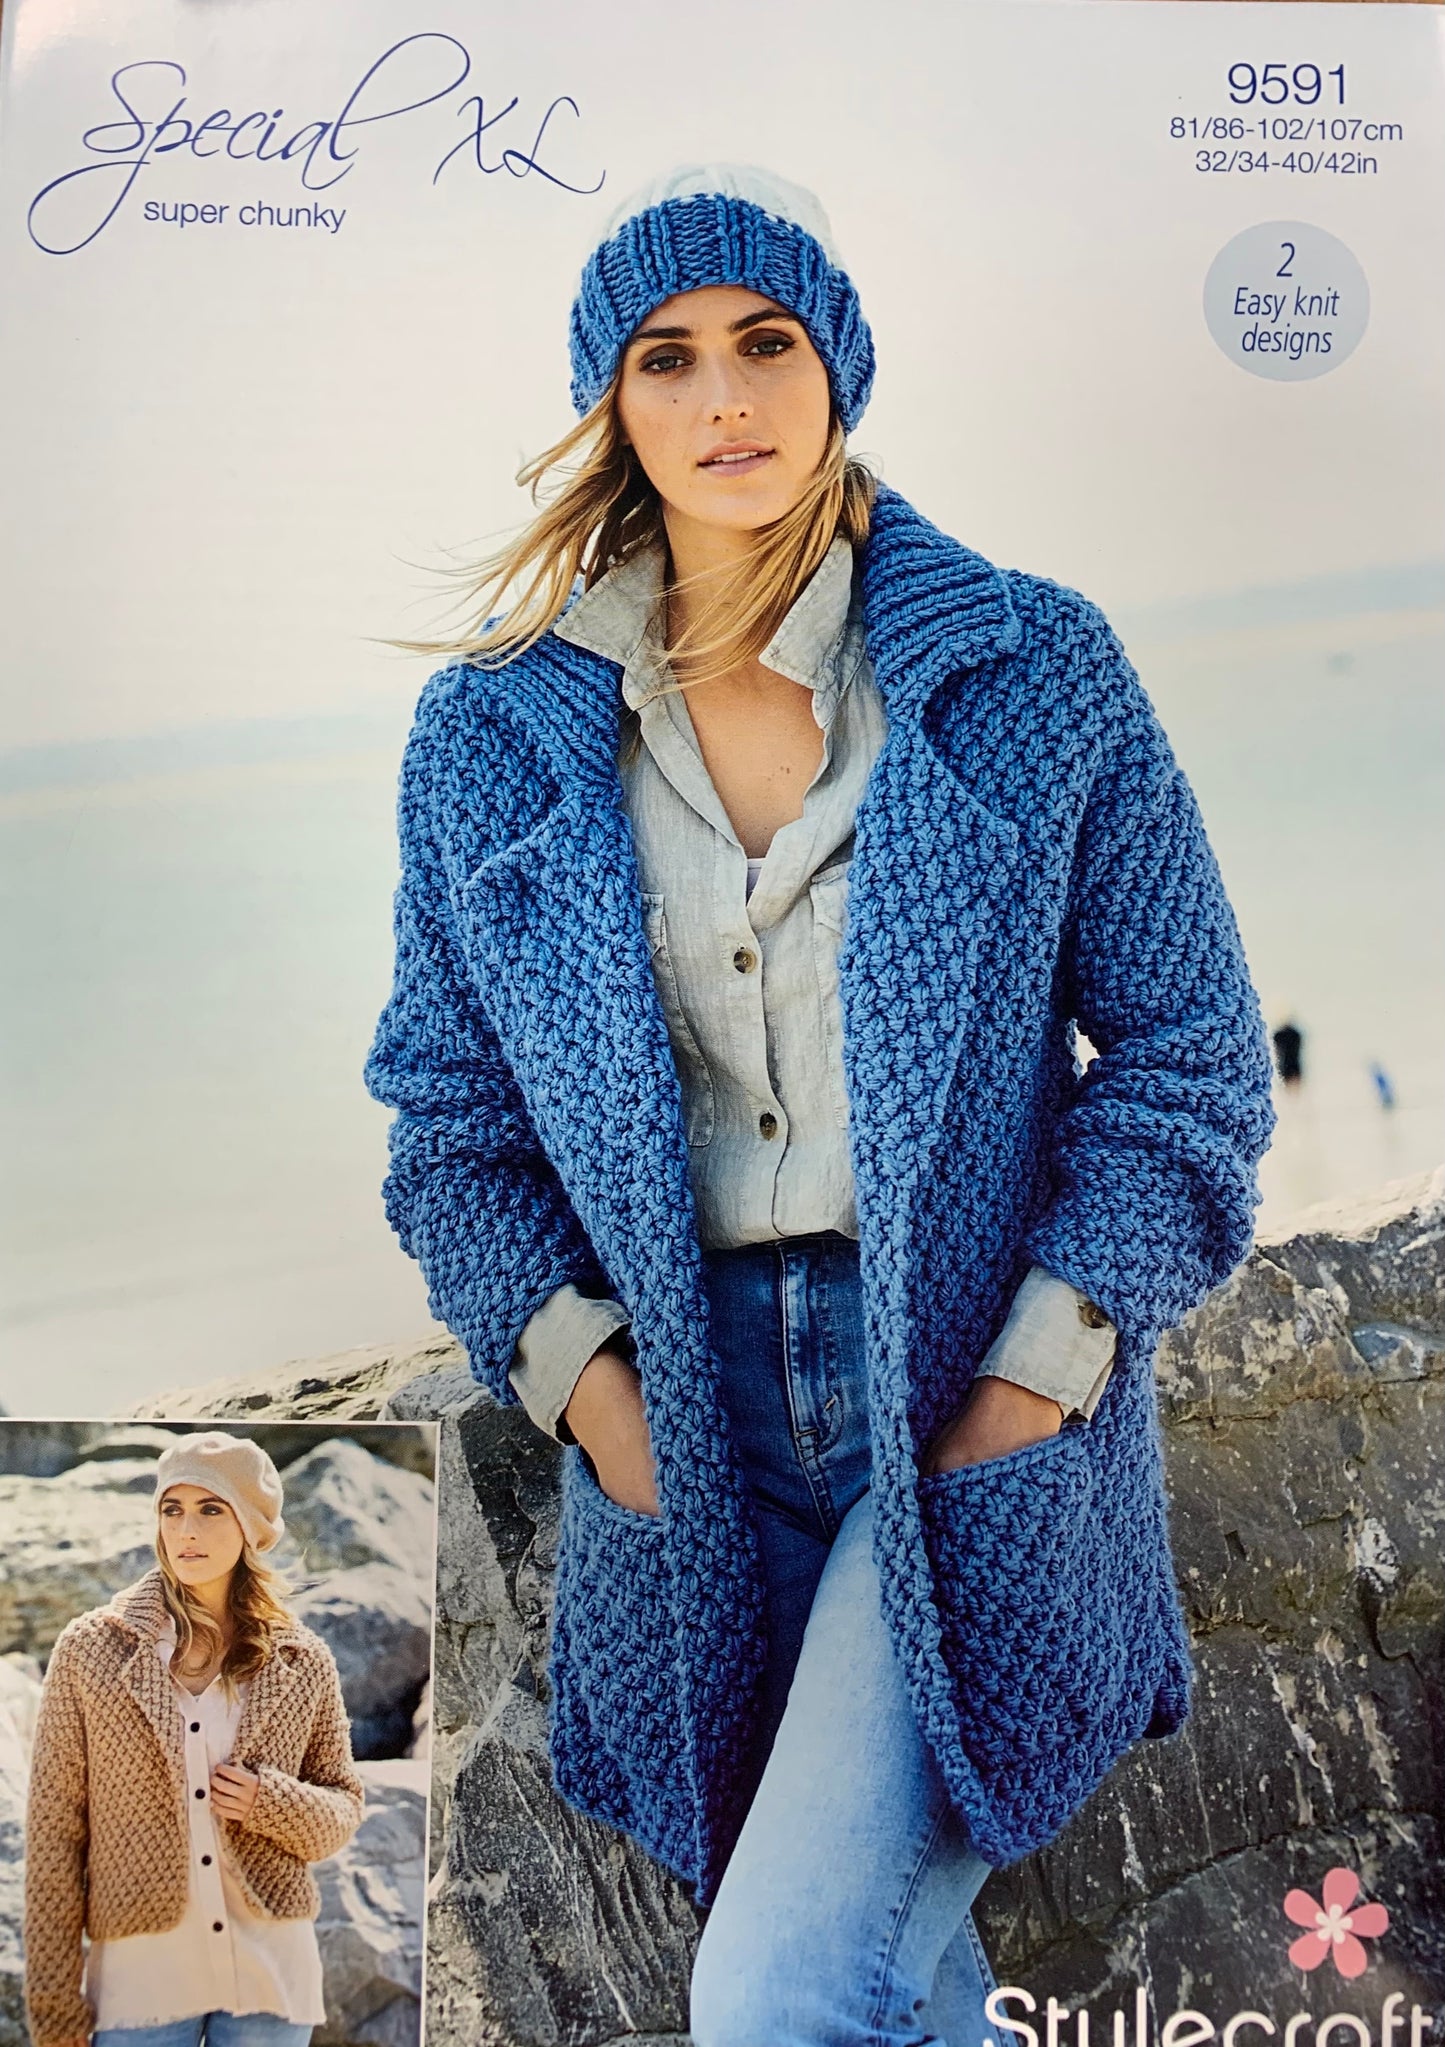 9591 Stylecraft Special XL super chunky ladies jackets knitting pattern